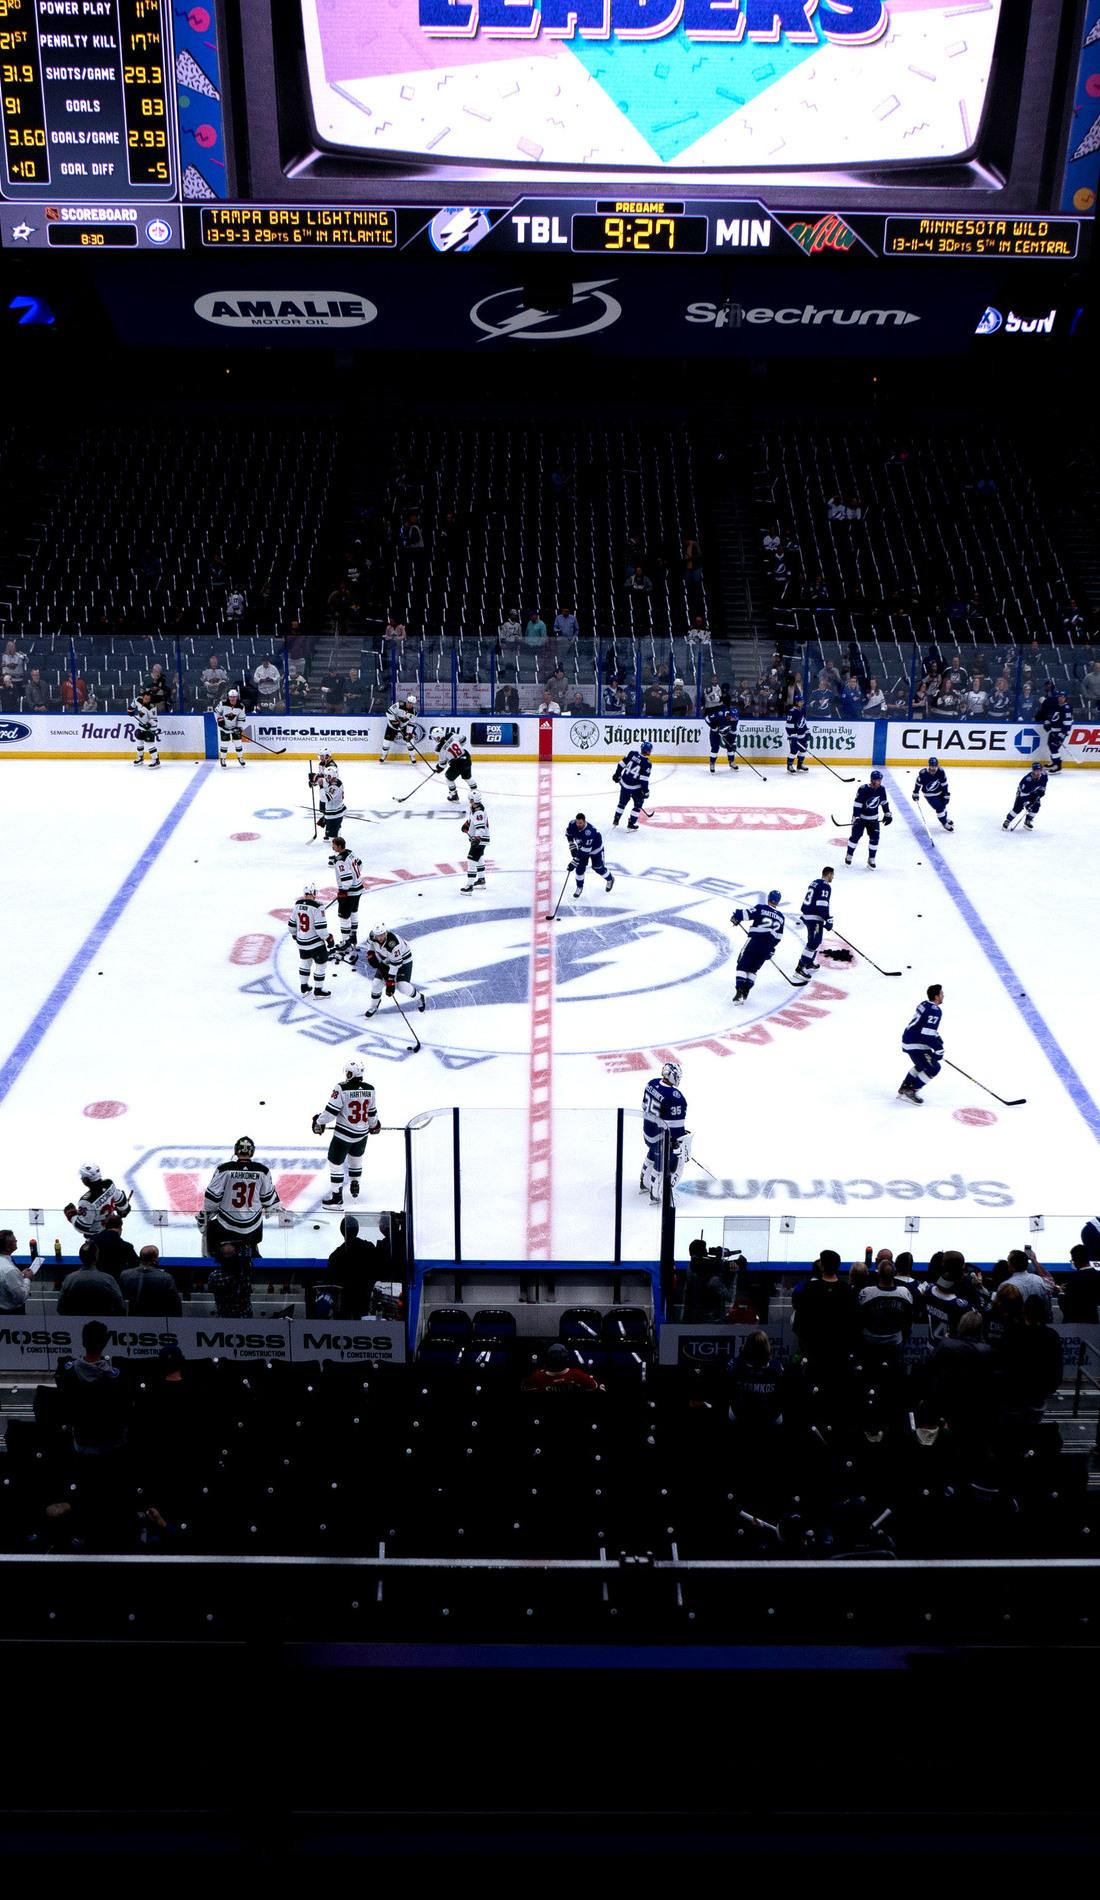 My first hockey game, Tampa Bay Lightning vs NY Rangers - Amalie